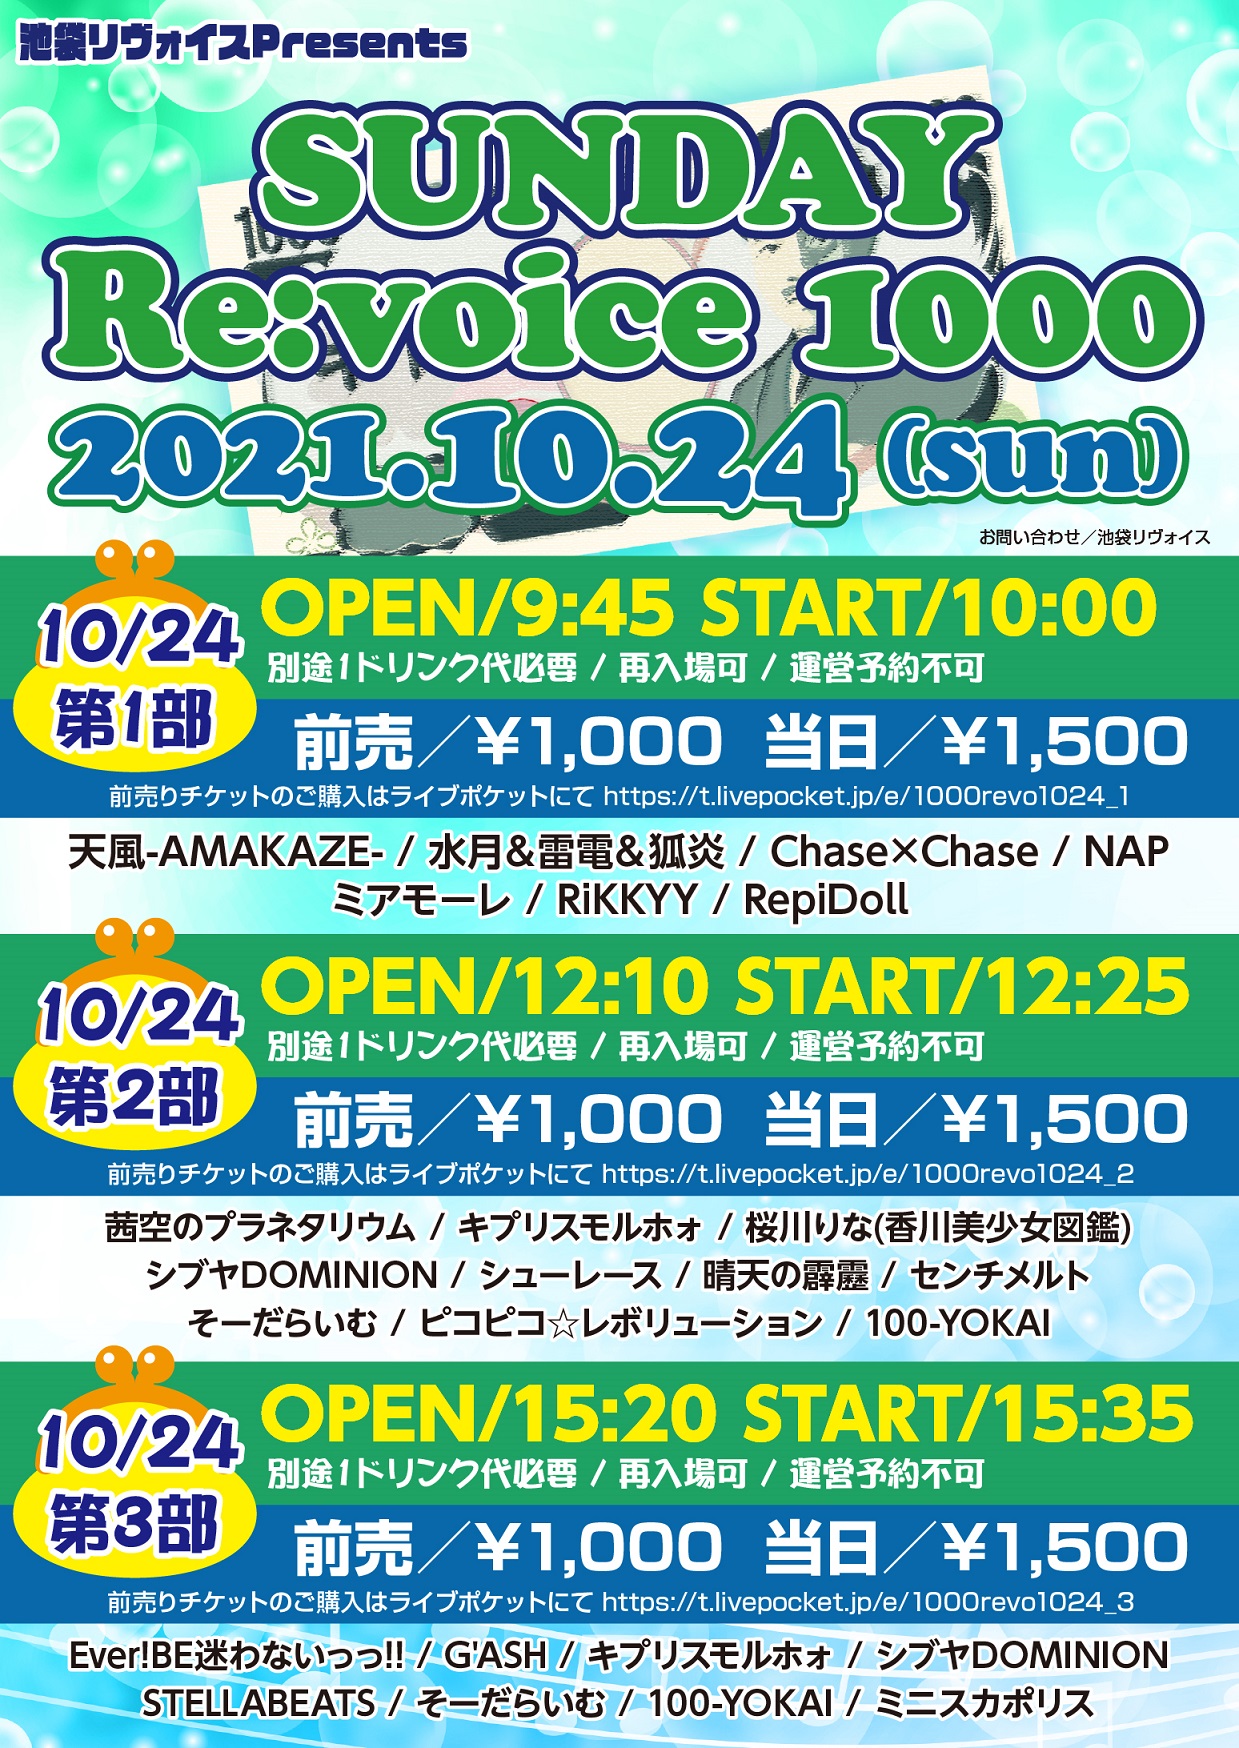 【第二部】SUNDAY Re:voice 1000